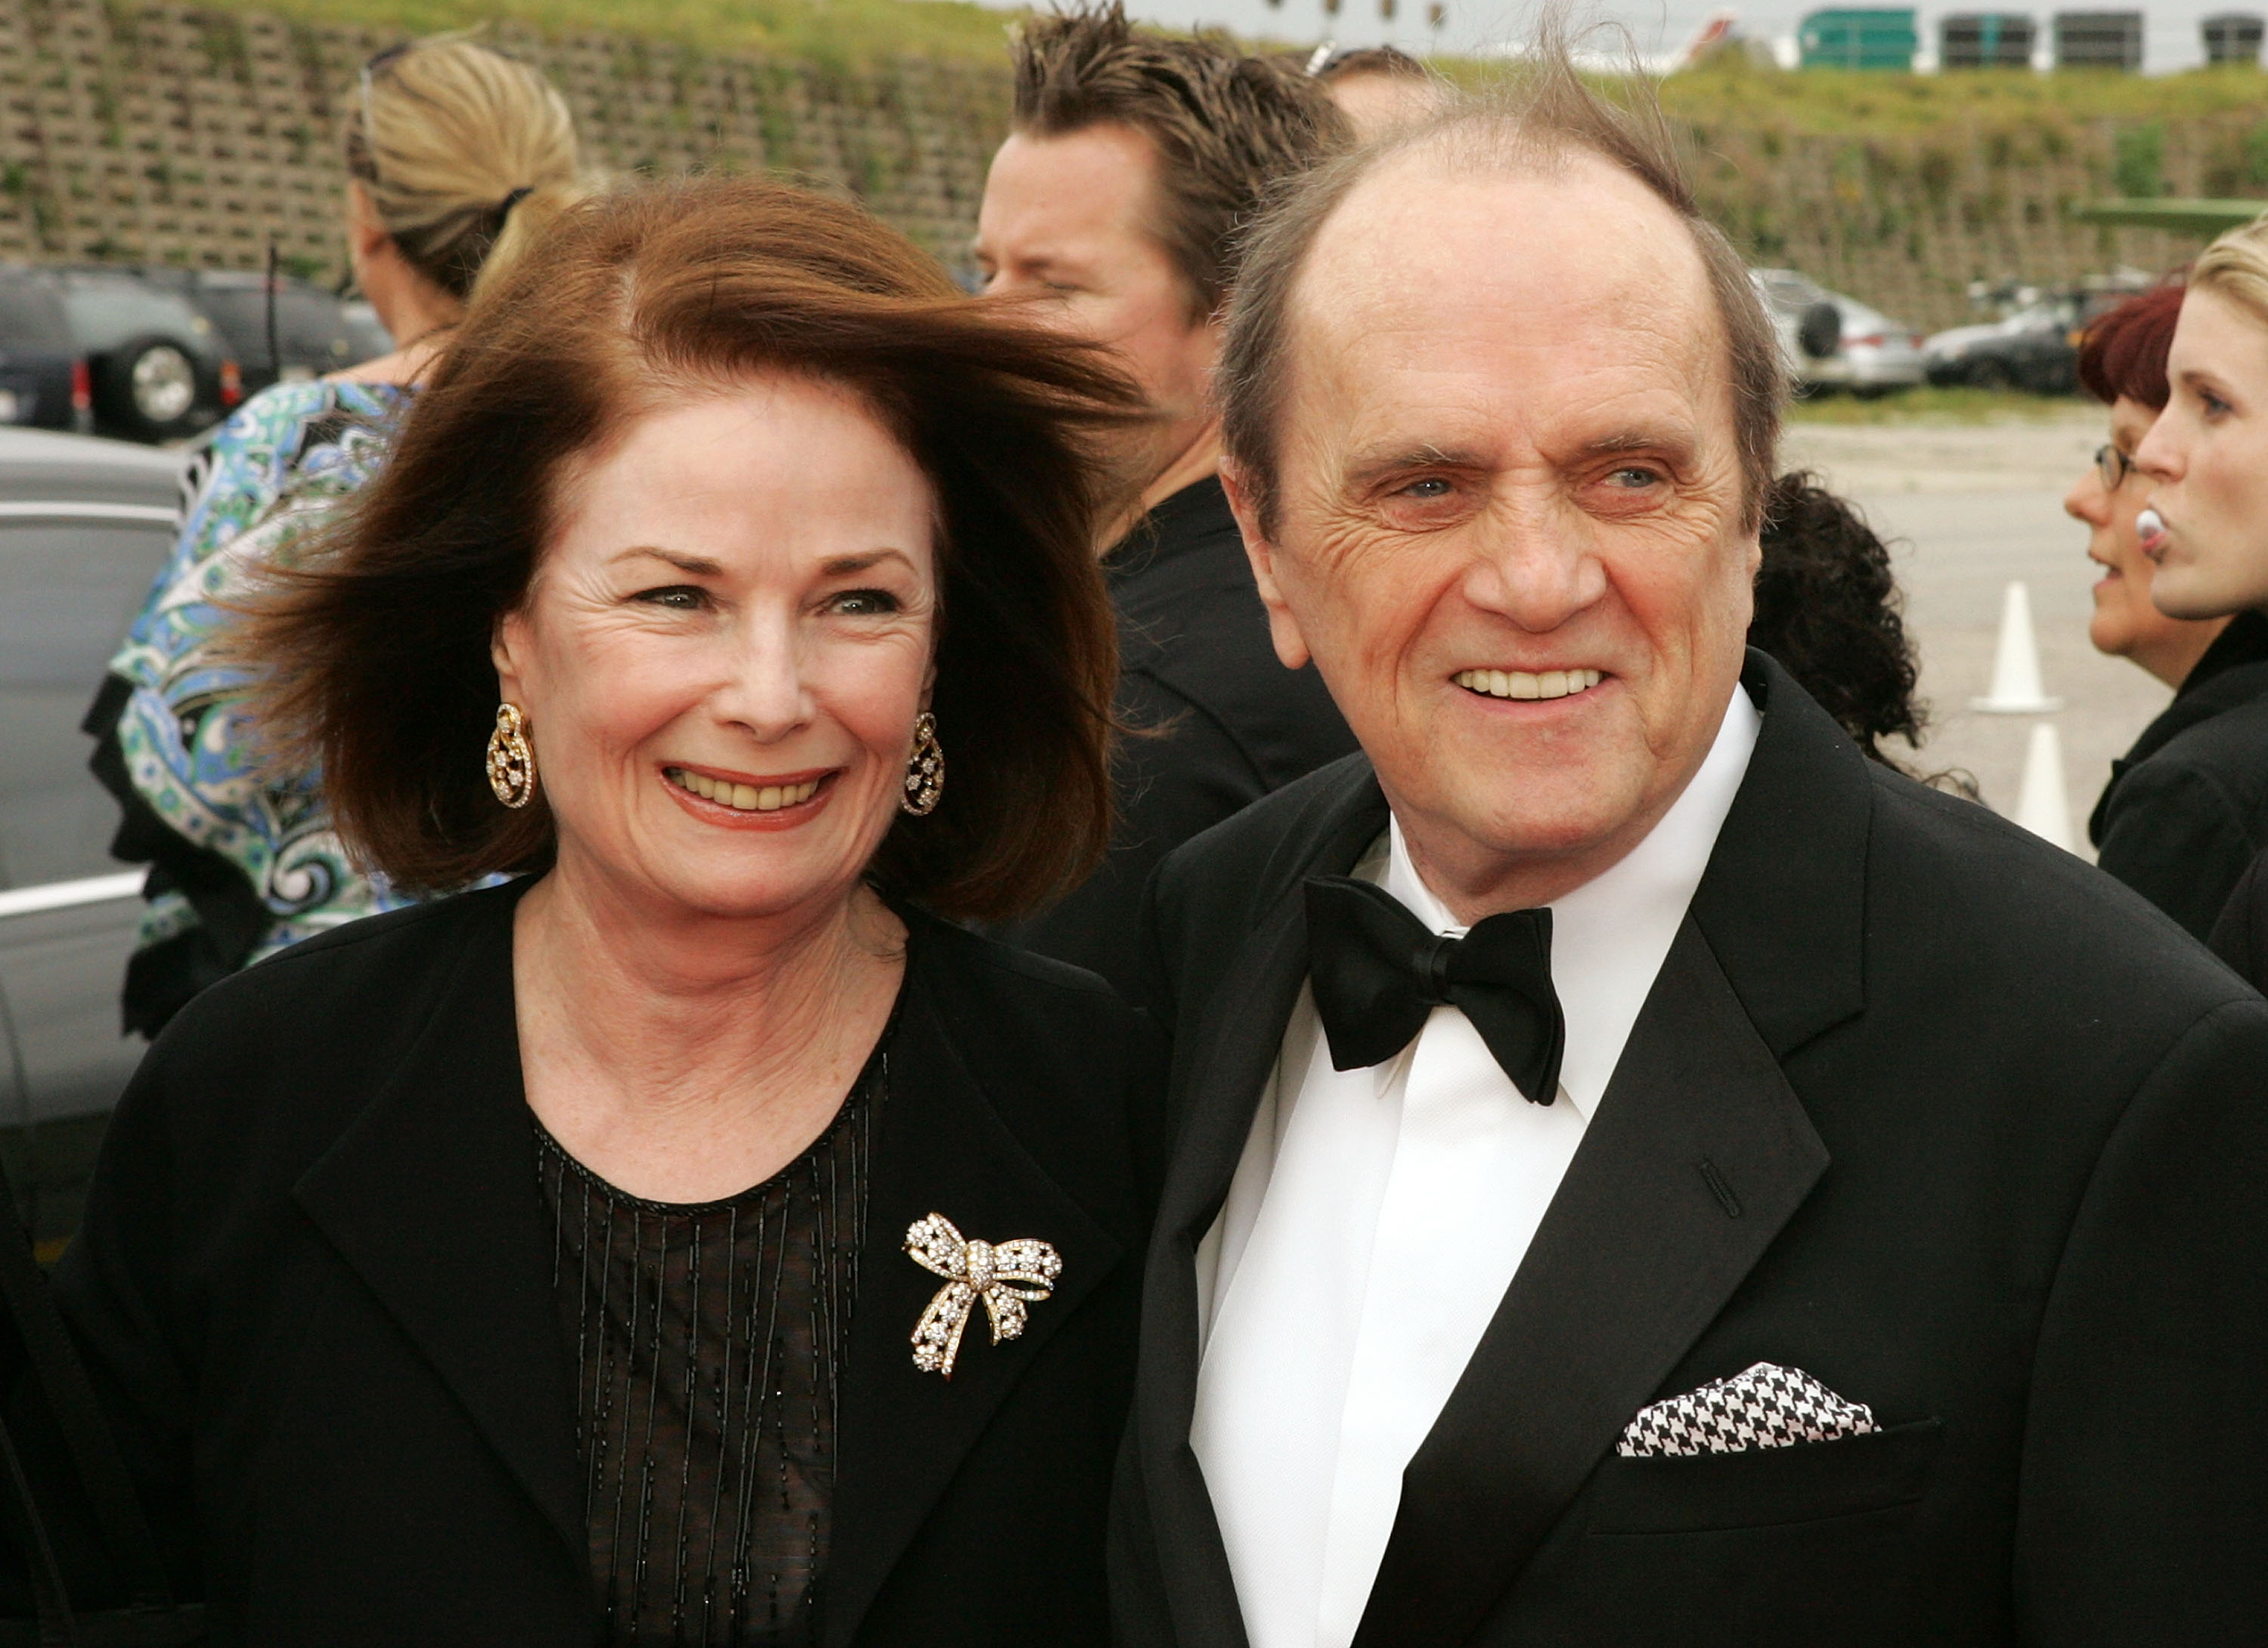 Bob and Ginny Newhart at the 2005 TV Land Awards in Santa Monica | Source: Getty Images